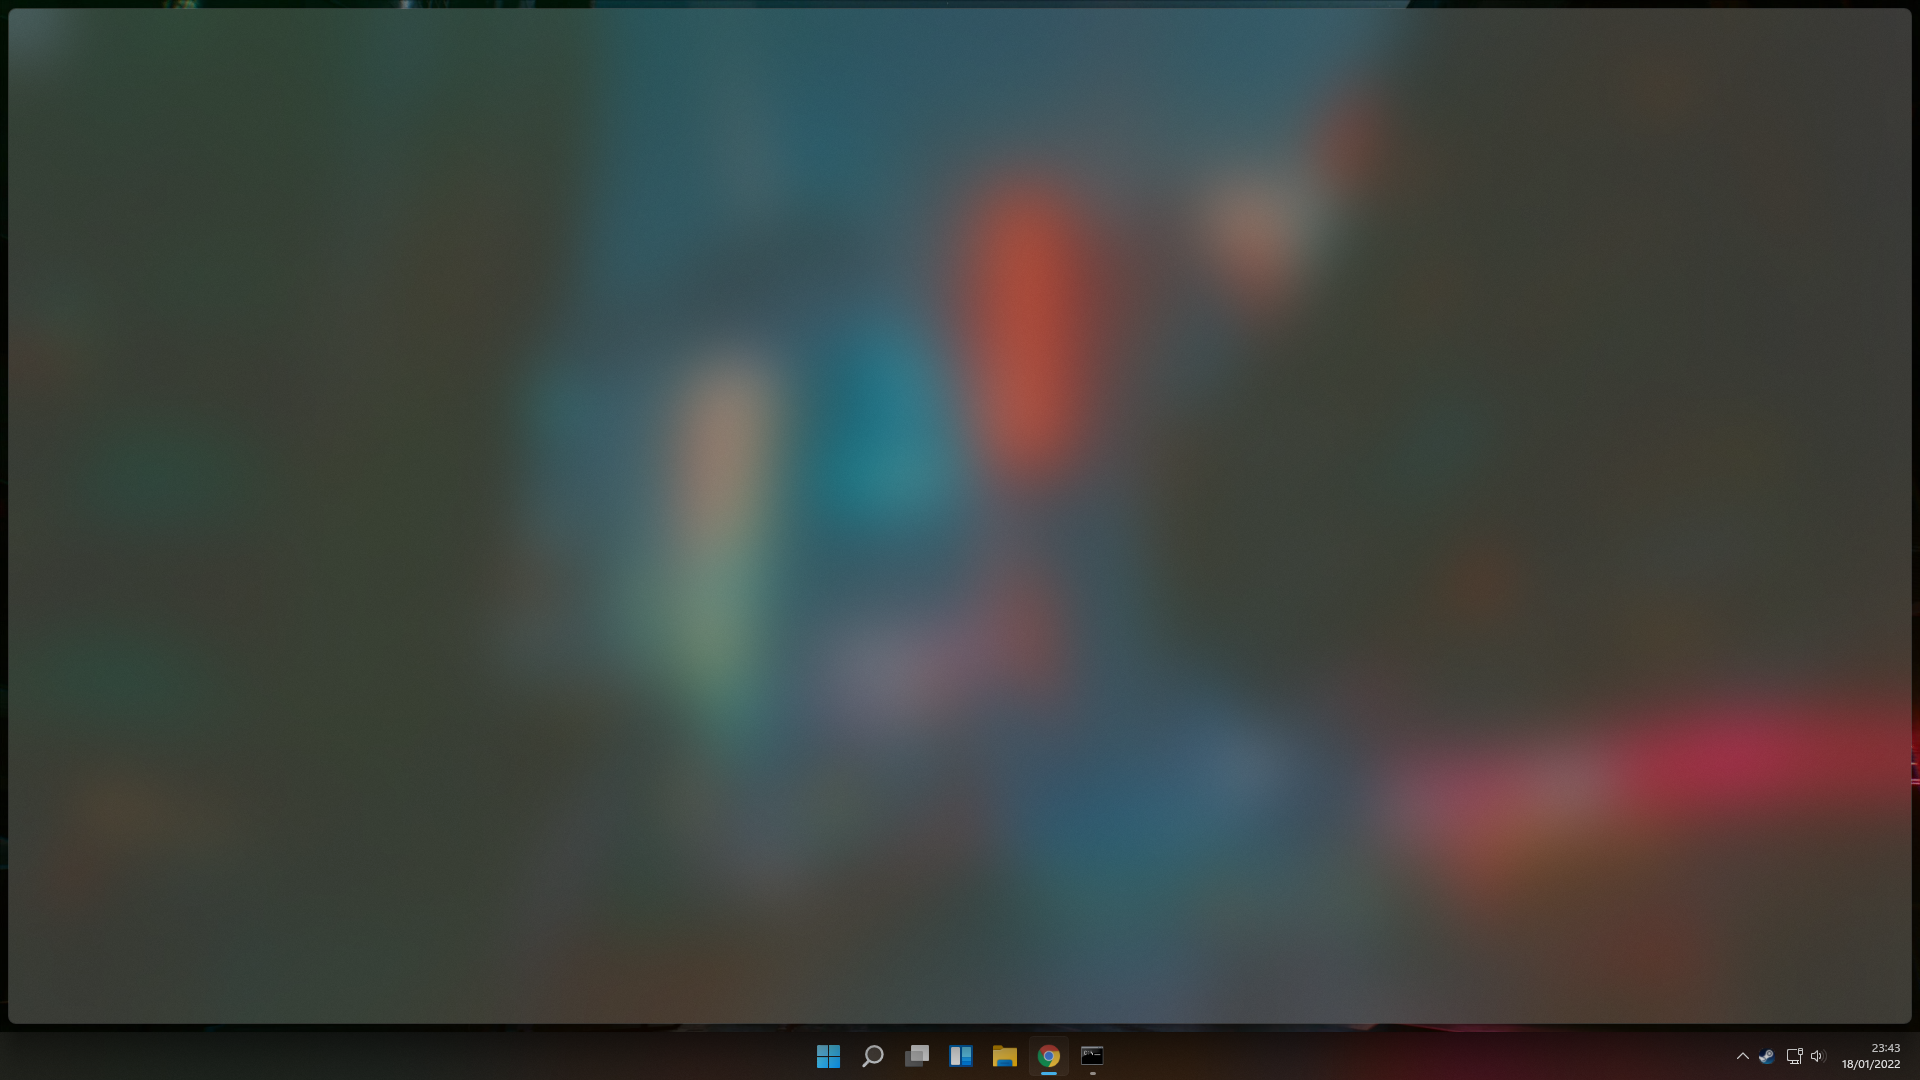 Windows 11 blur window bug - Microsoft Community Hub